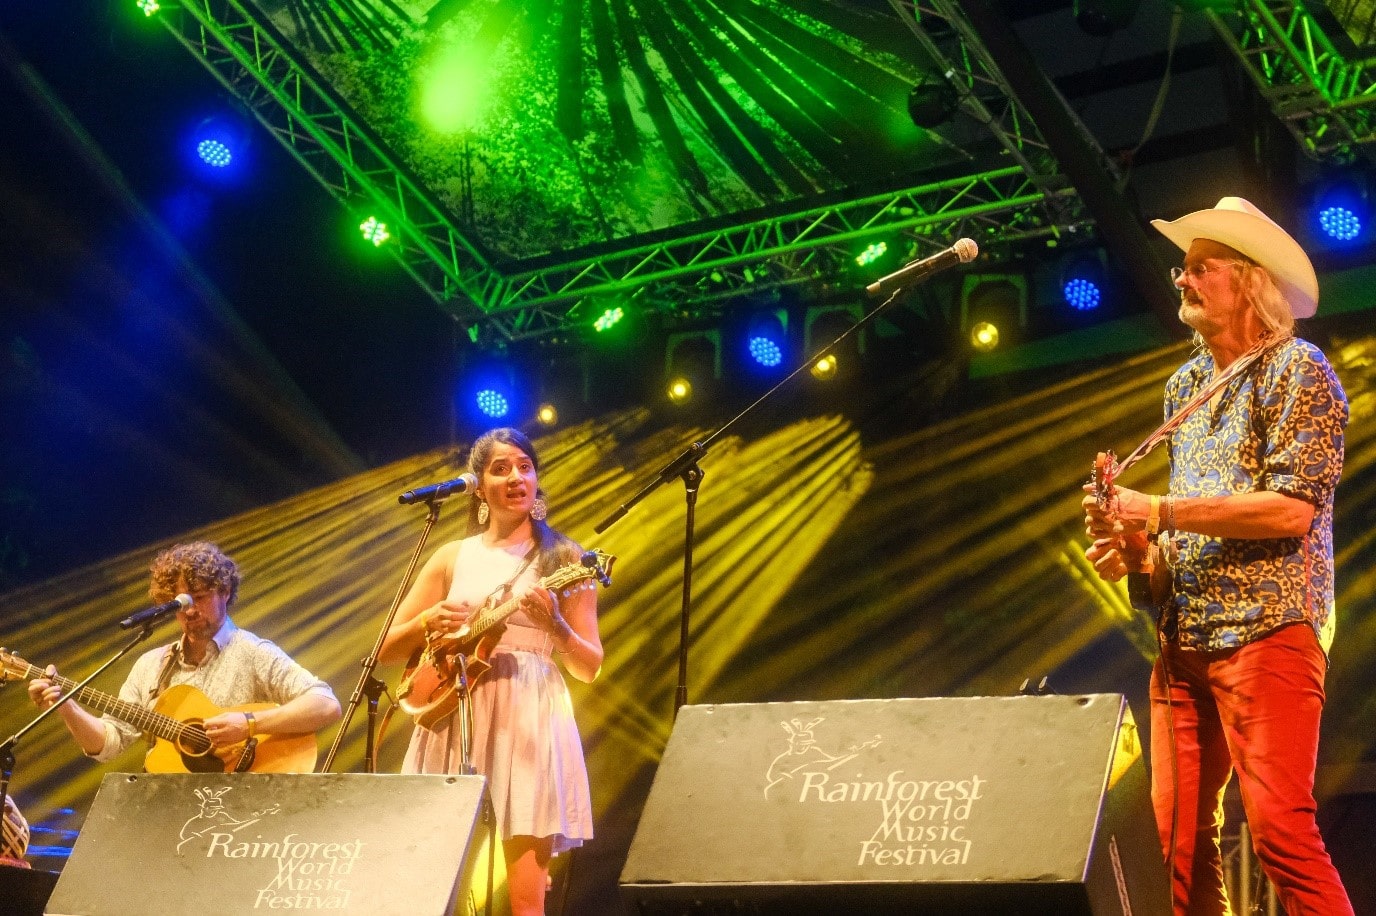 Rainforest World Music Festival: Exploring the Vibrant Diversity of Culture